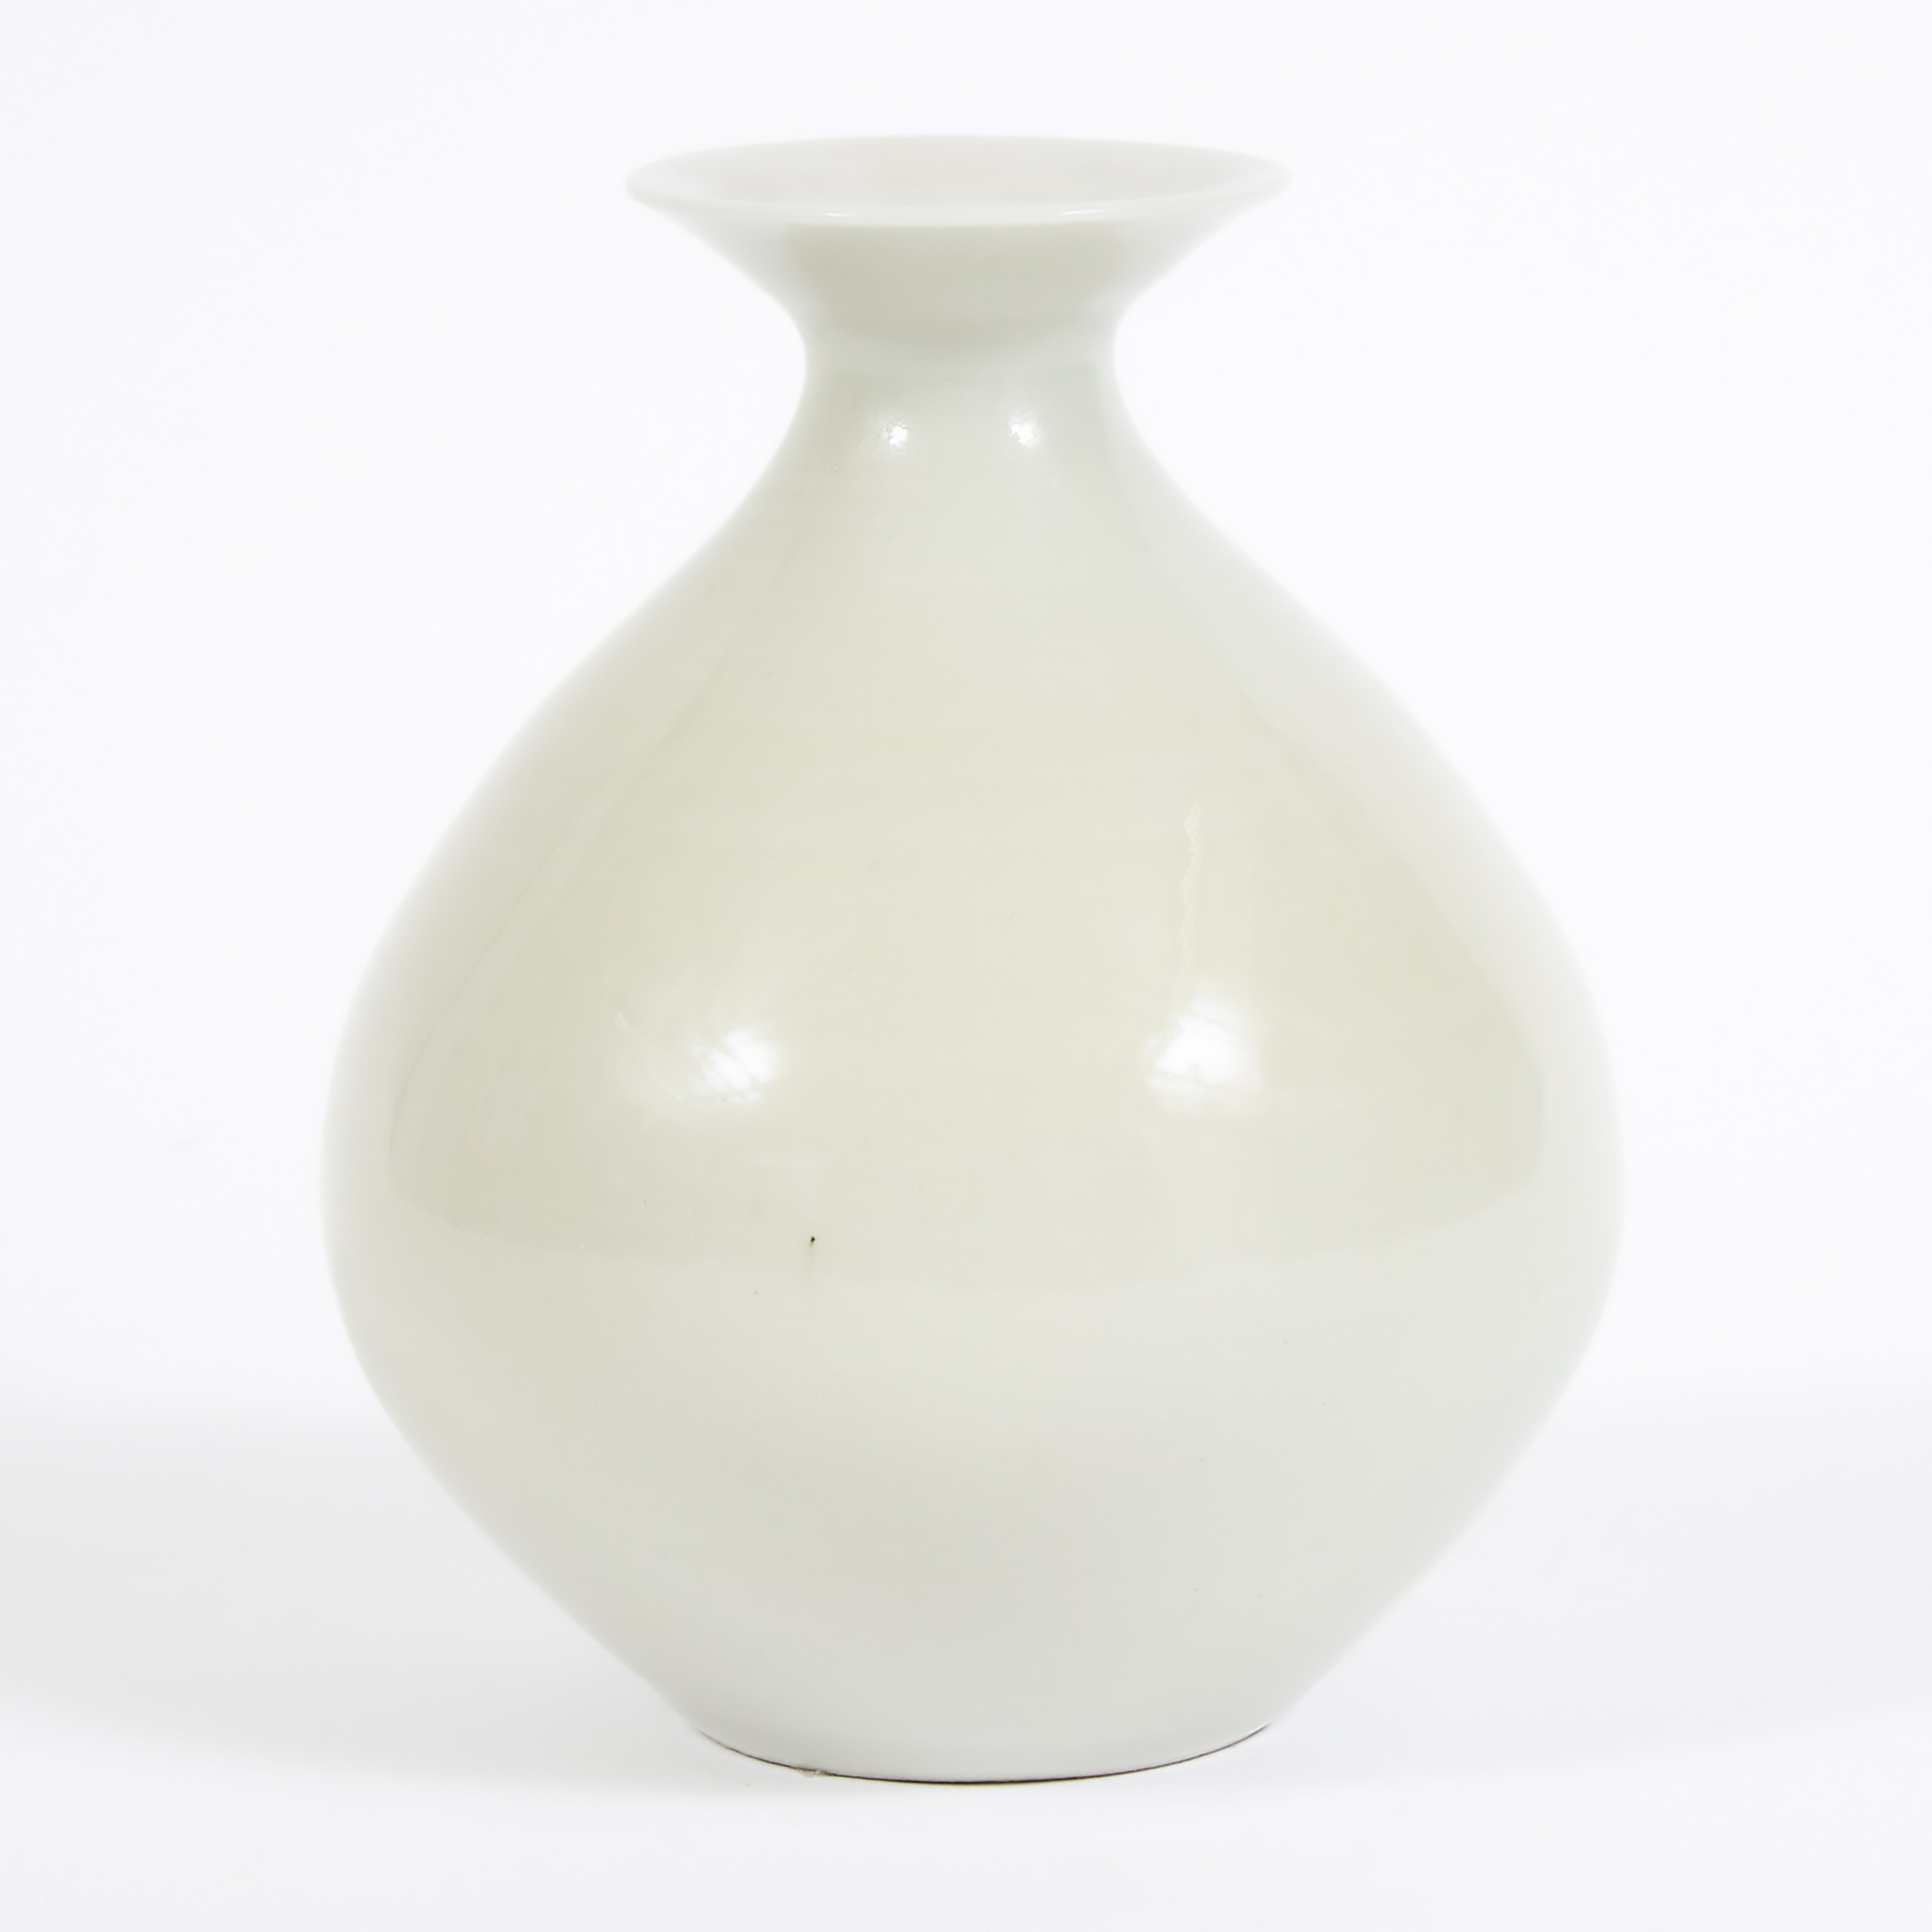 Harlan House (Canadian, b.1943), White Glazed Vase, 1974